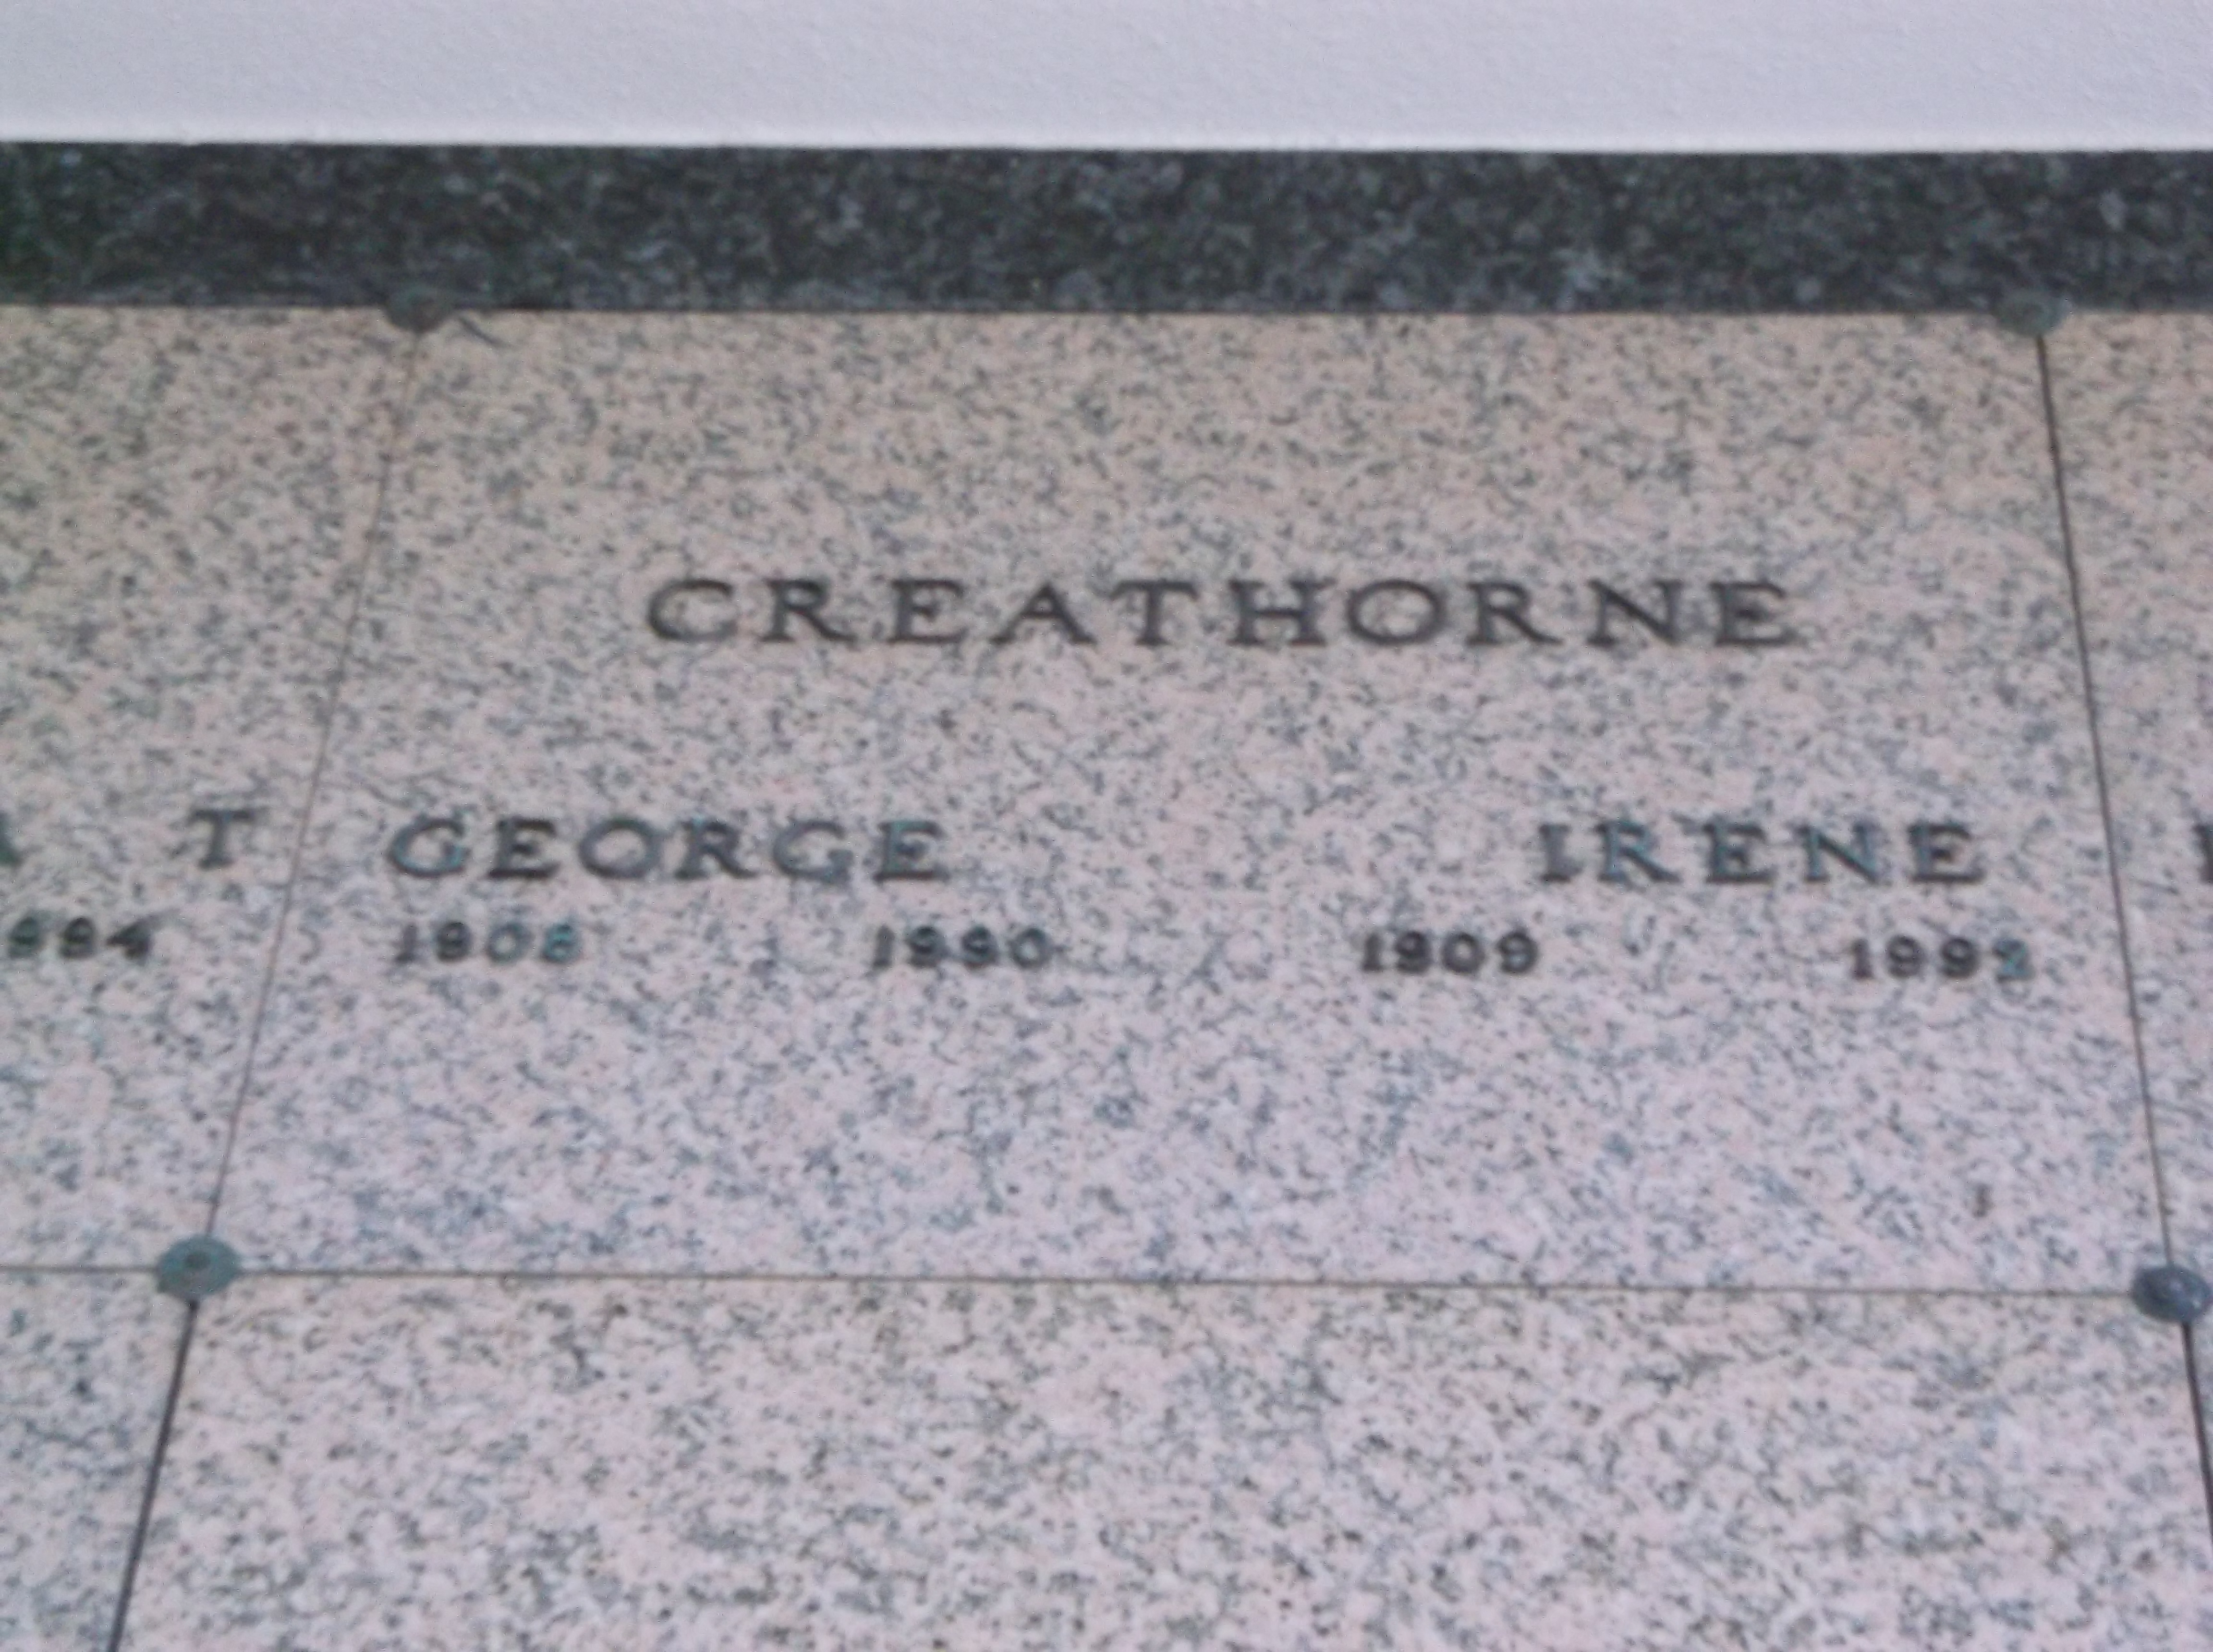 George Greathorne